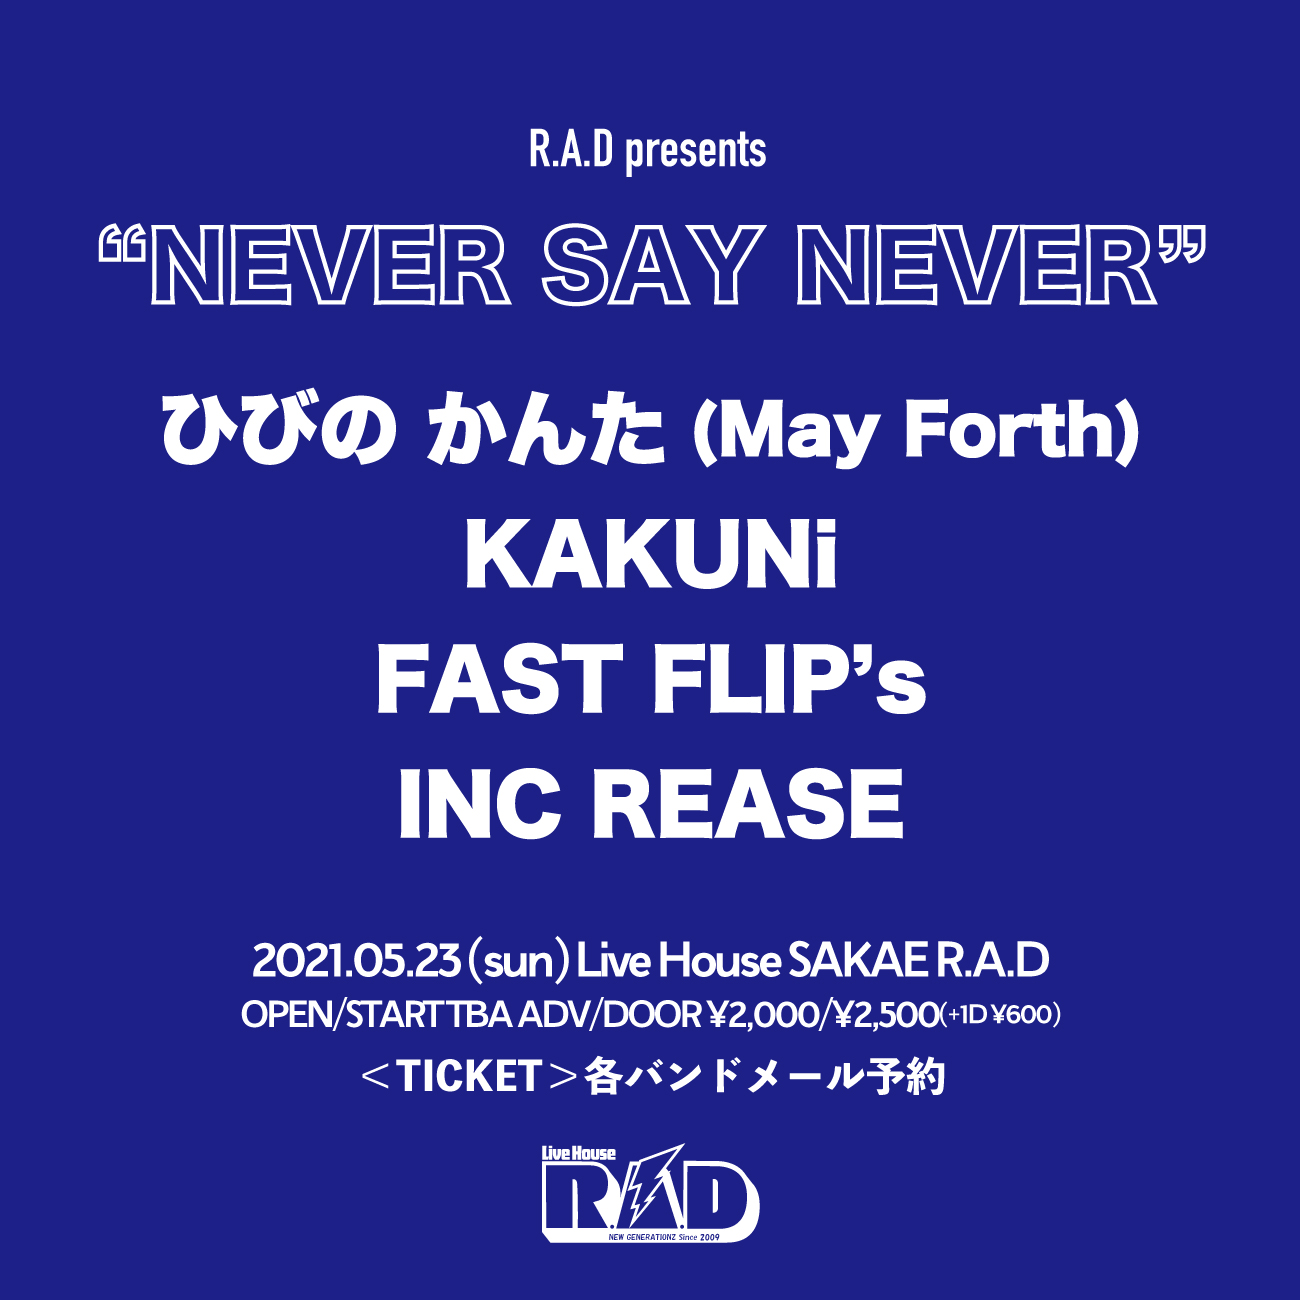 R.A.D presents "NEVER SAY NEVER"